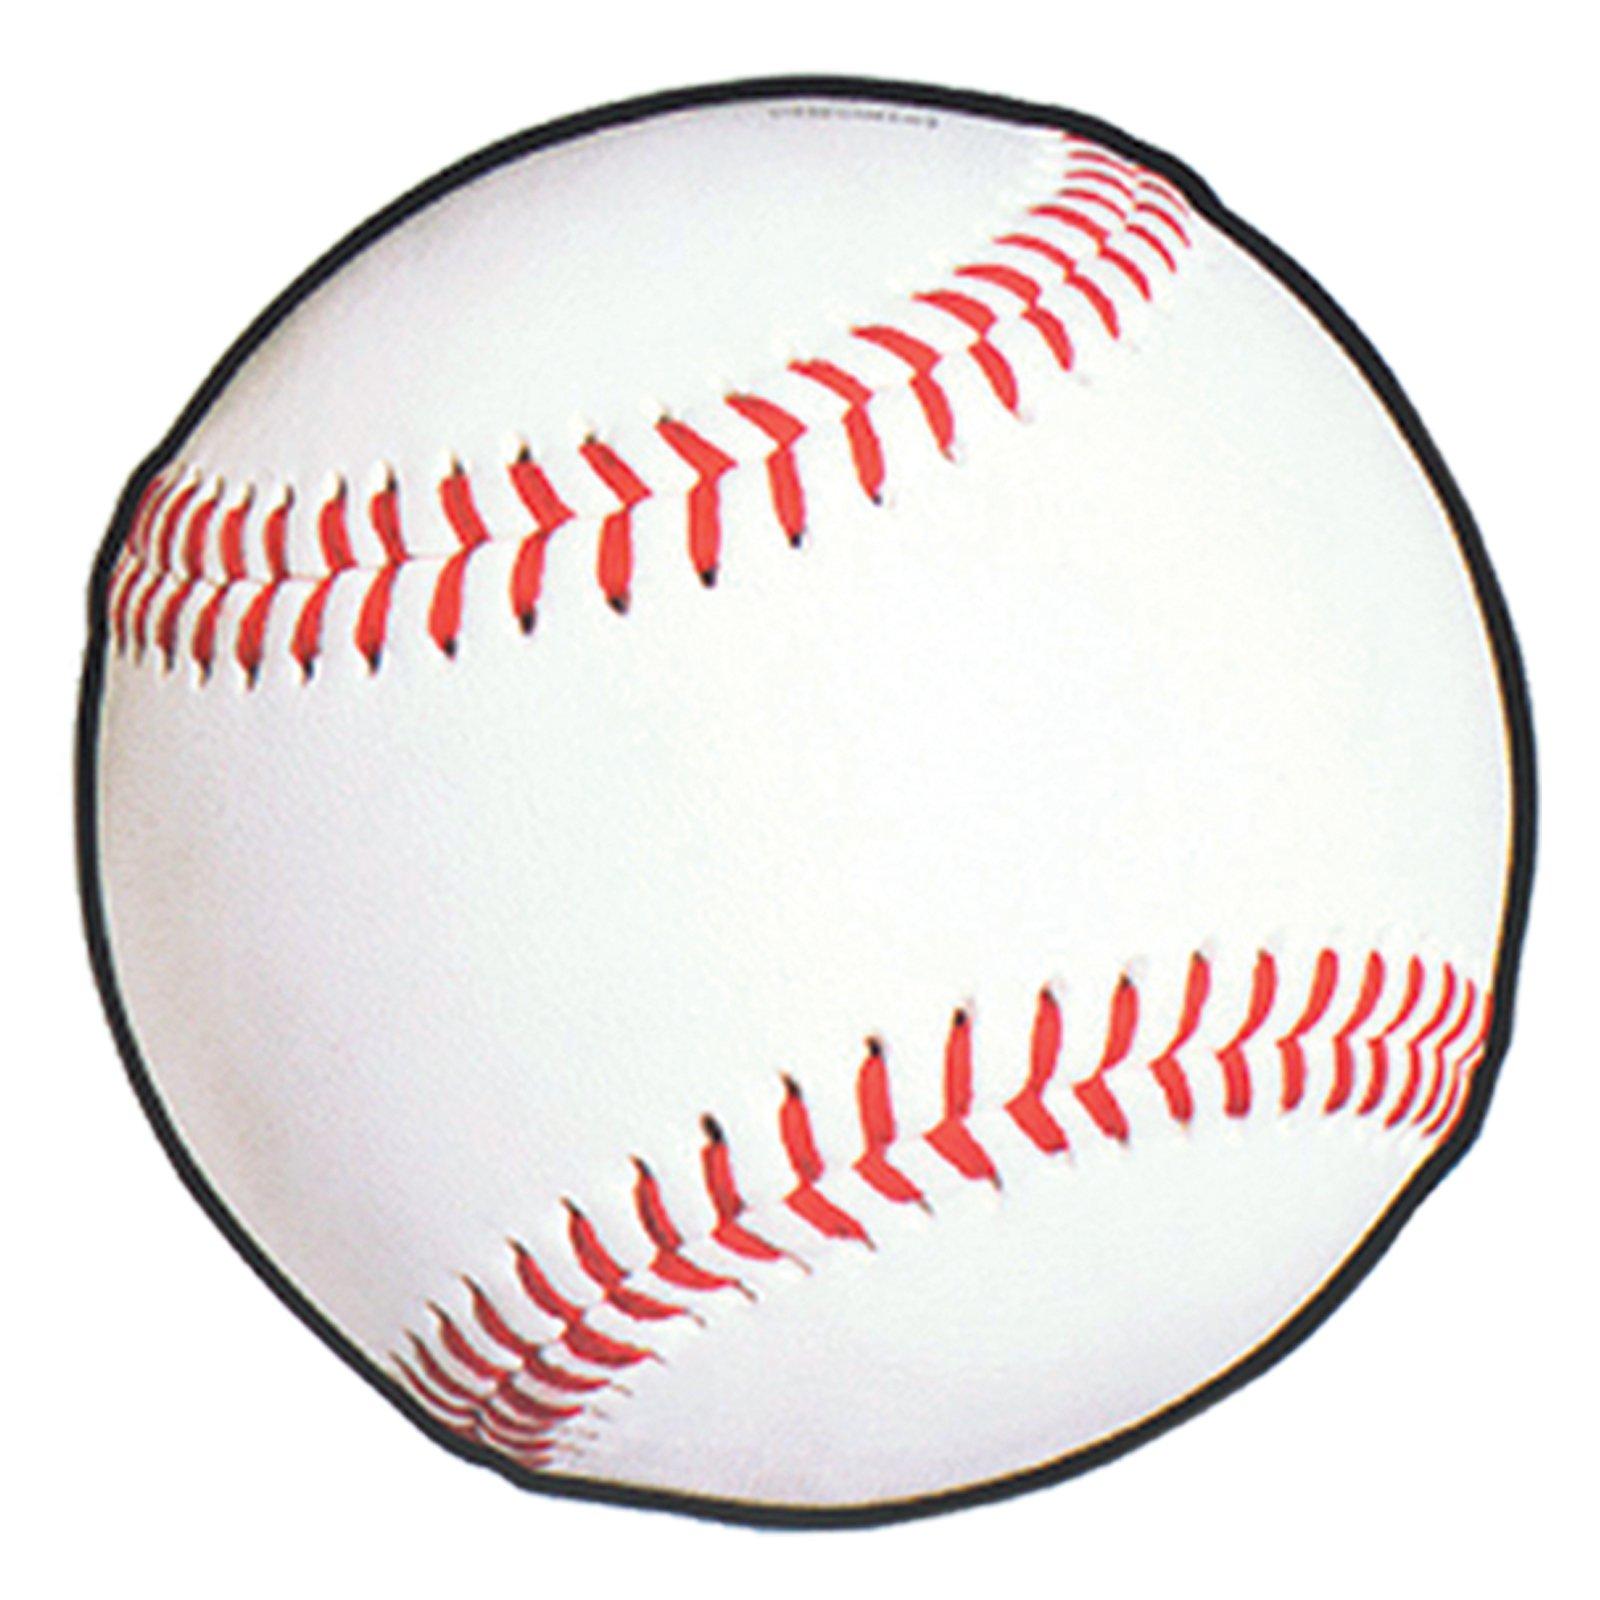 Baseball clipart vector clipa - Baseball Clipart Images Free